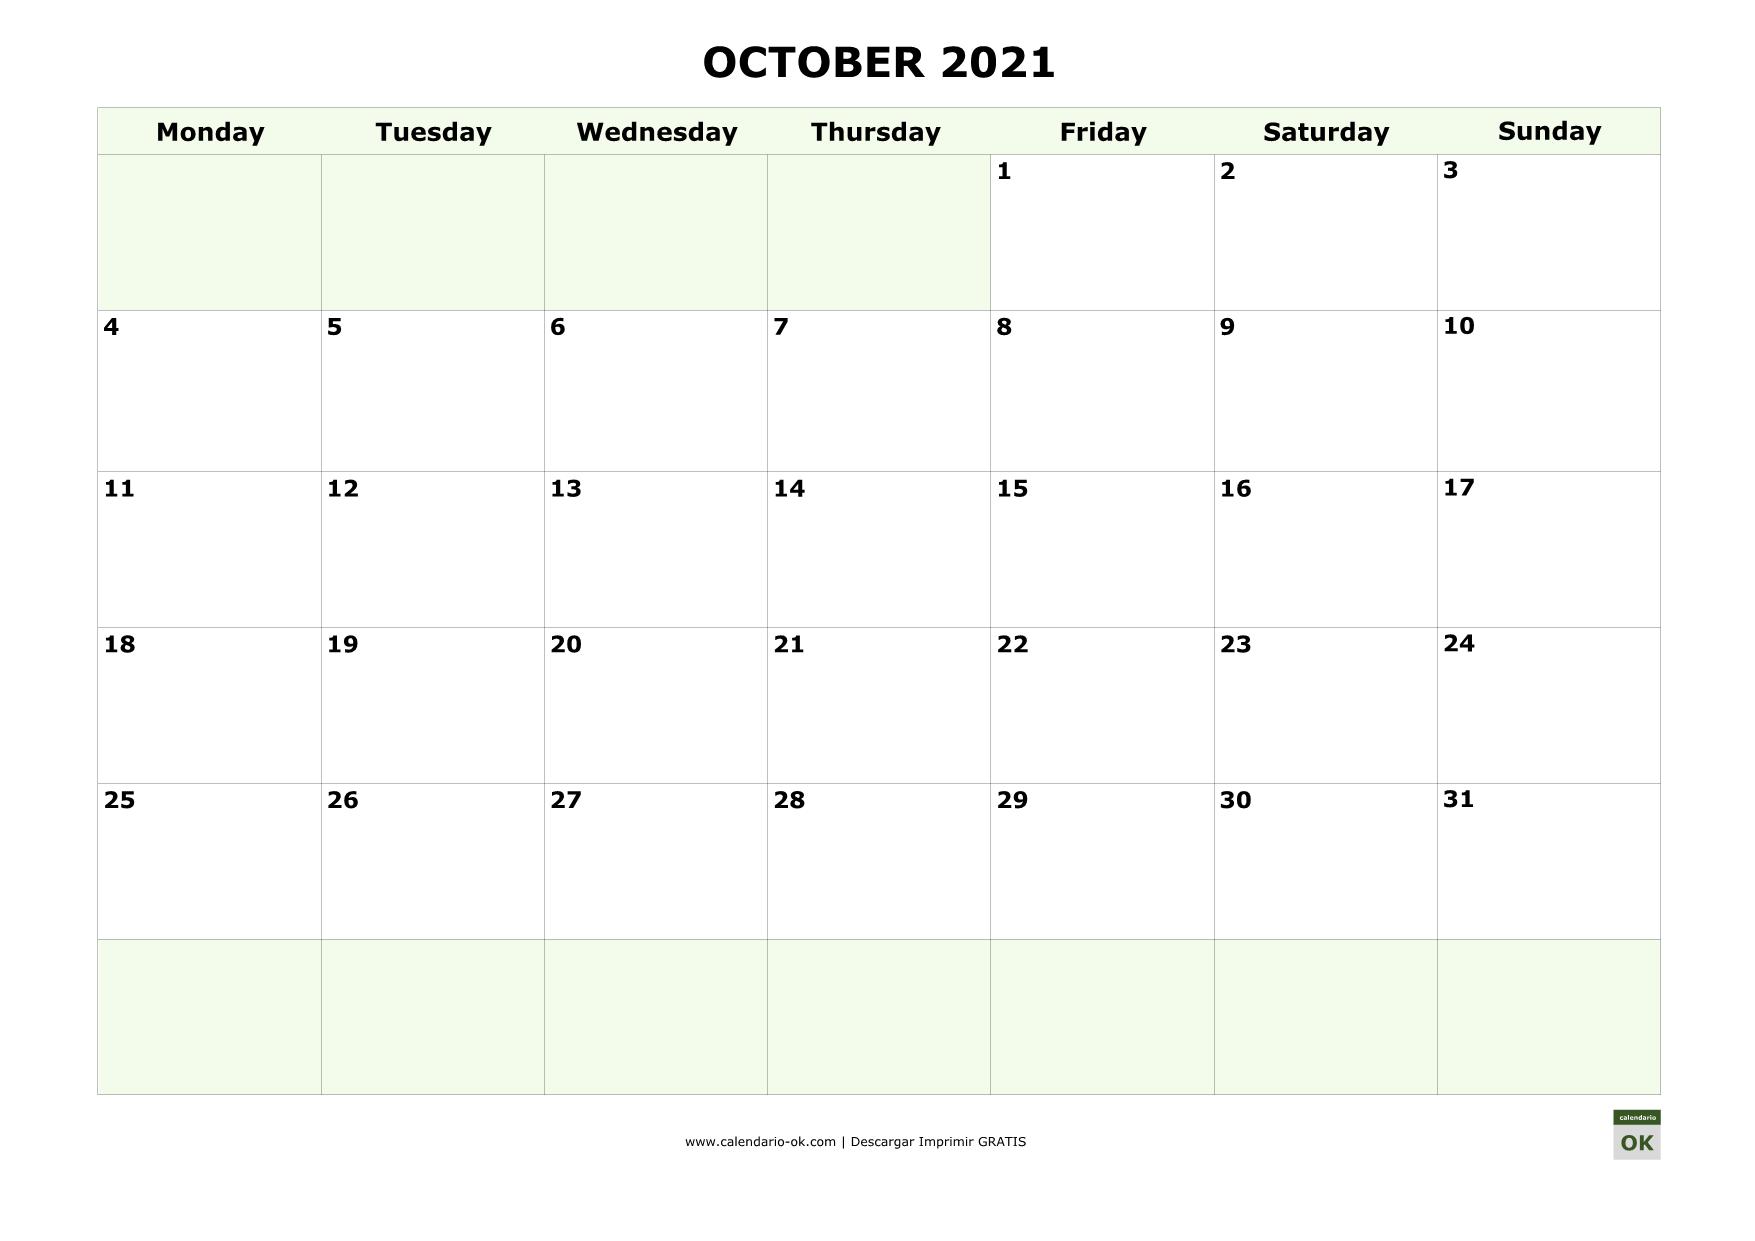 OCTUBRE 2021 calendario en INGLES